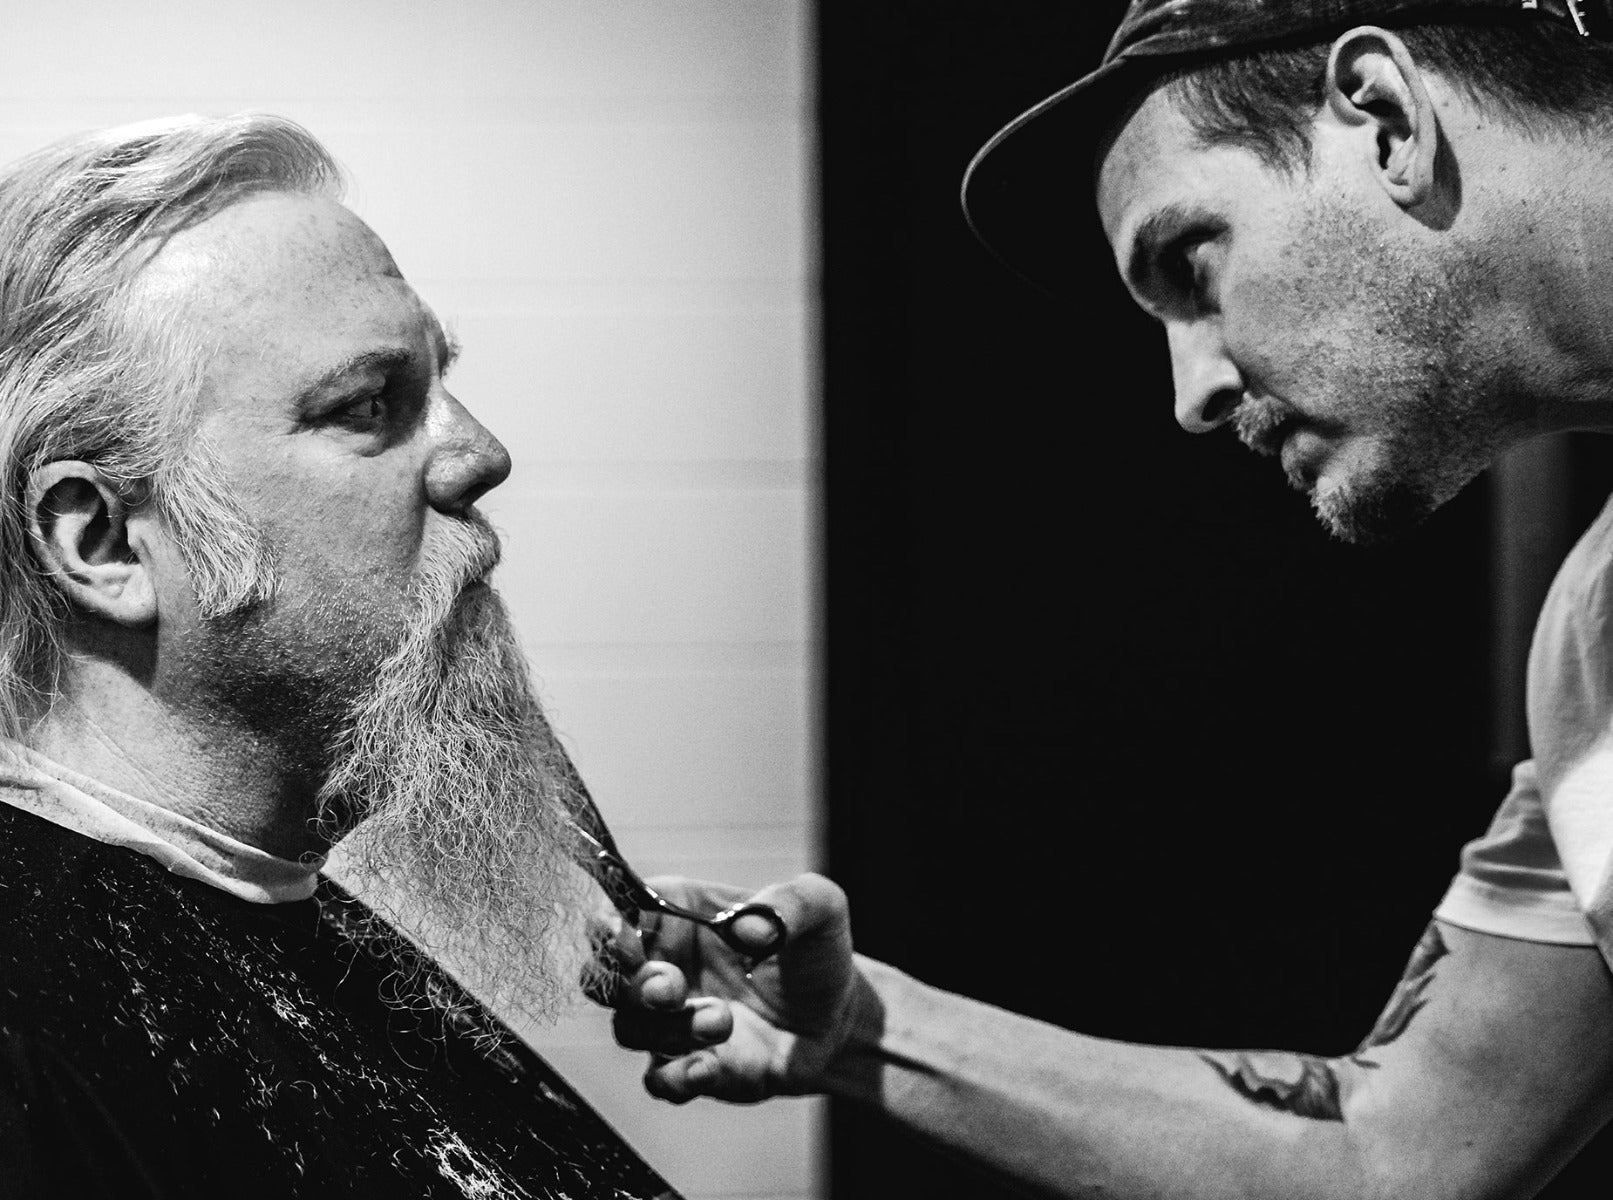 Barber trimmng mans beard